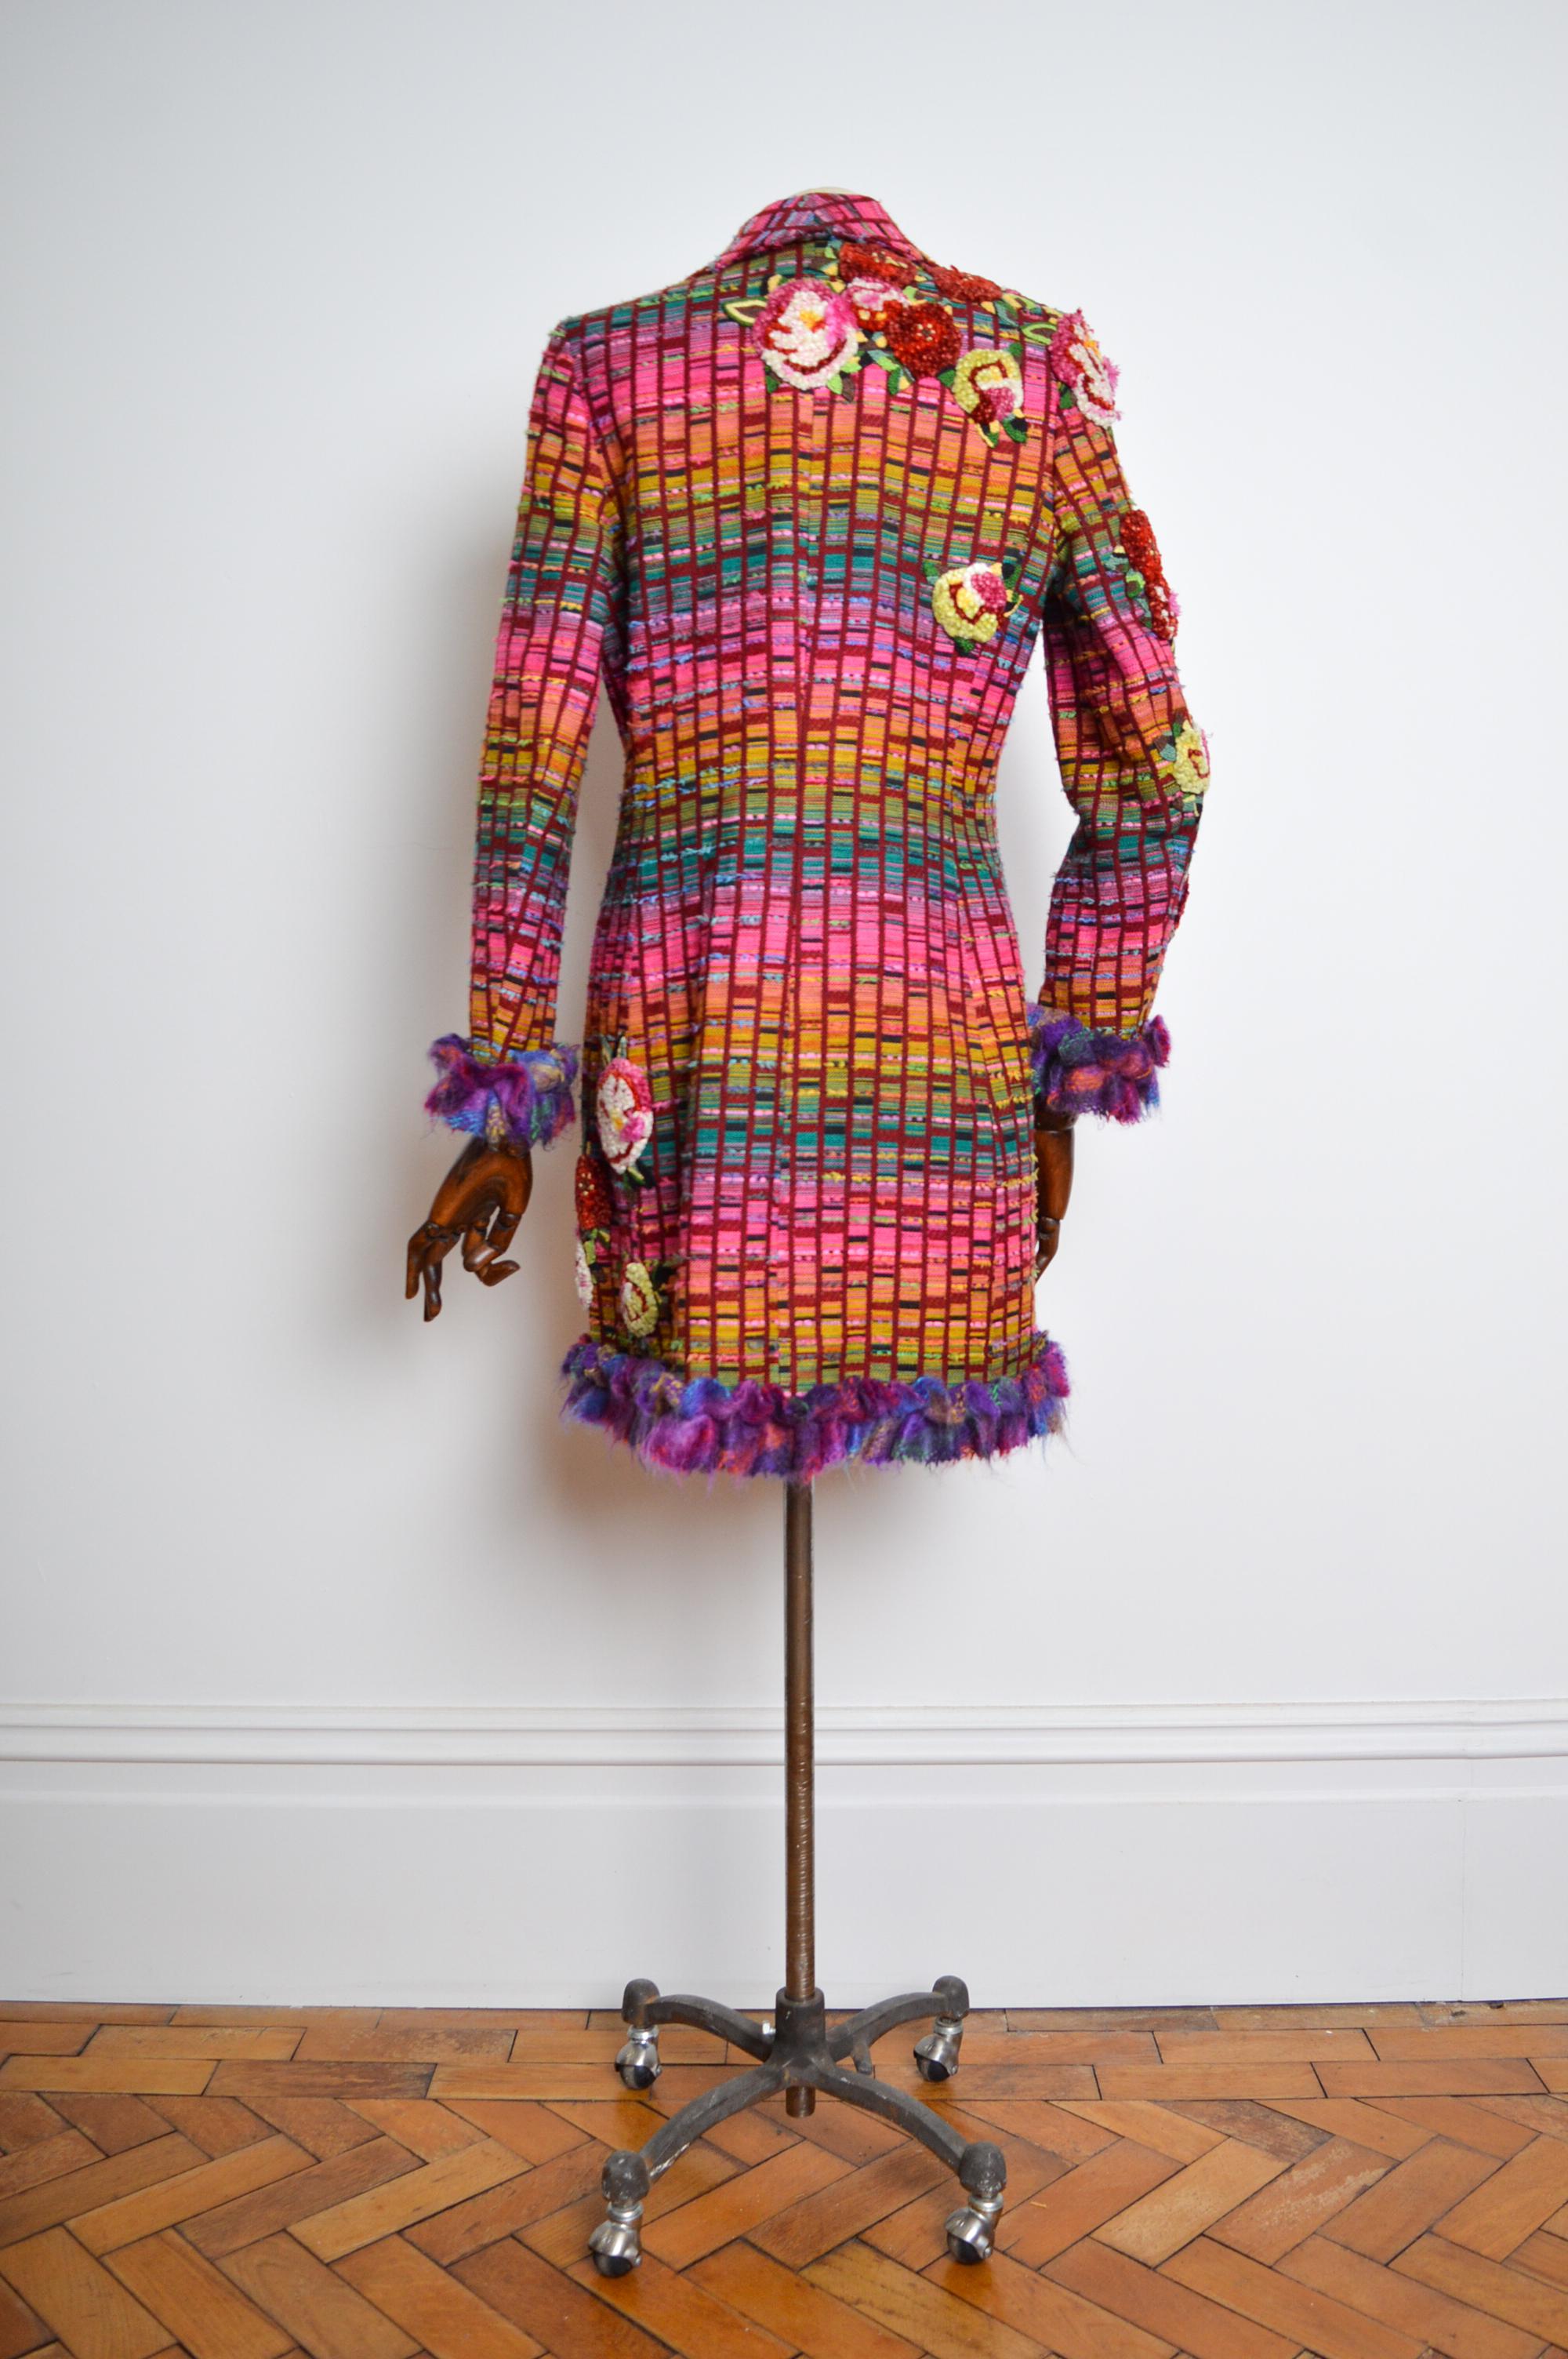 Superb Tweed Mathew Williamson Jewel Tone Embroidered Embellished Coat 13